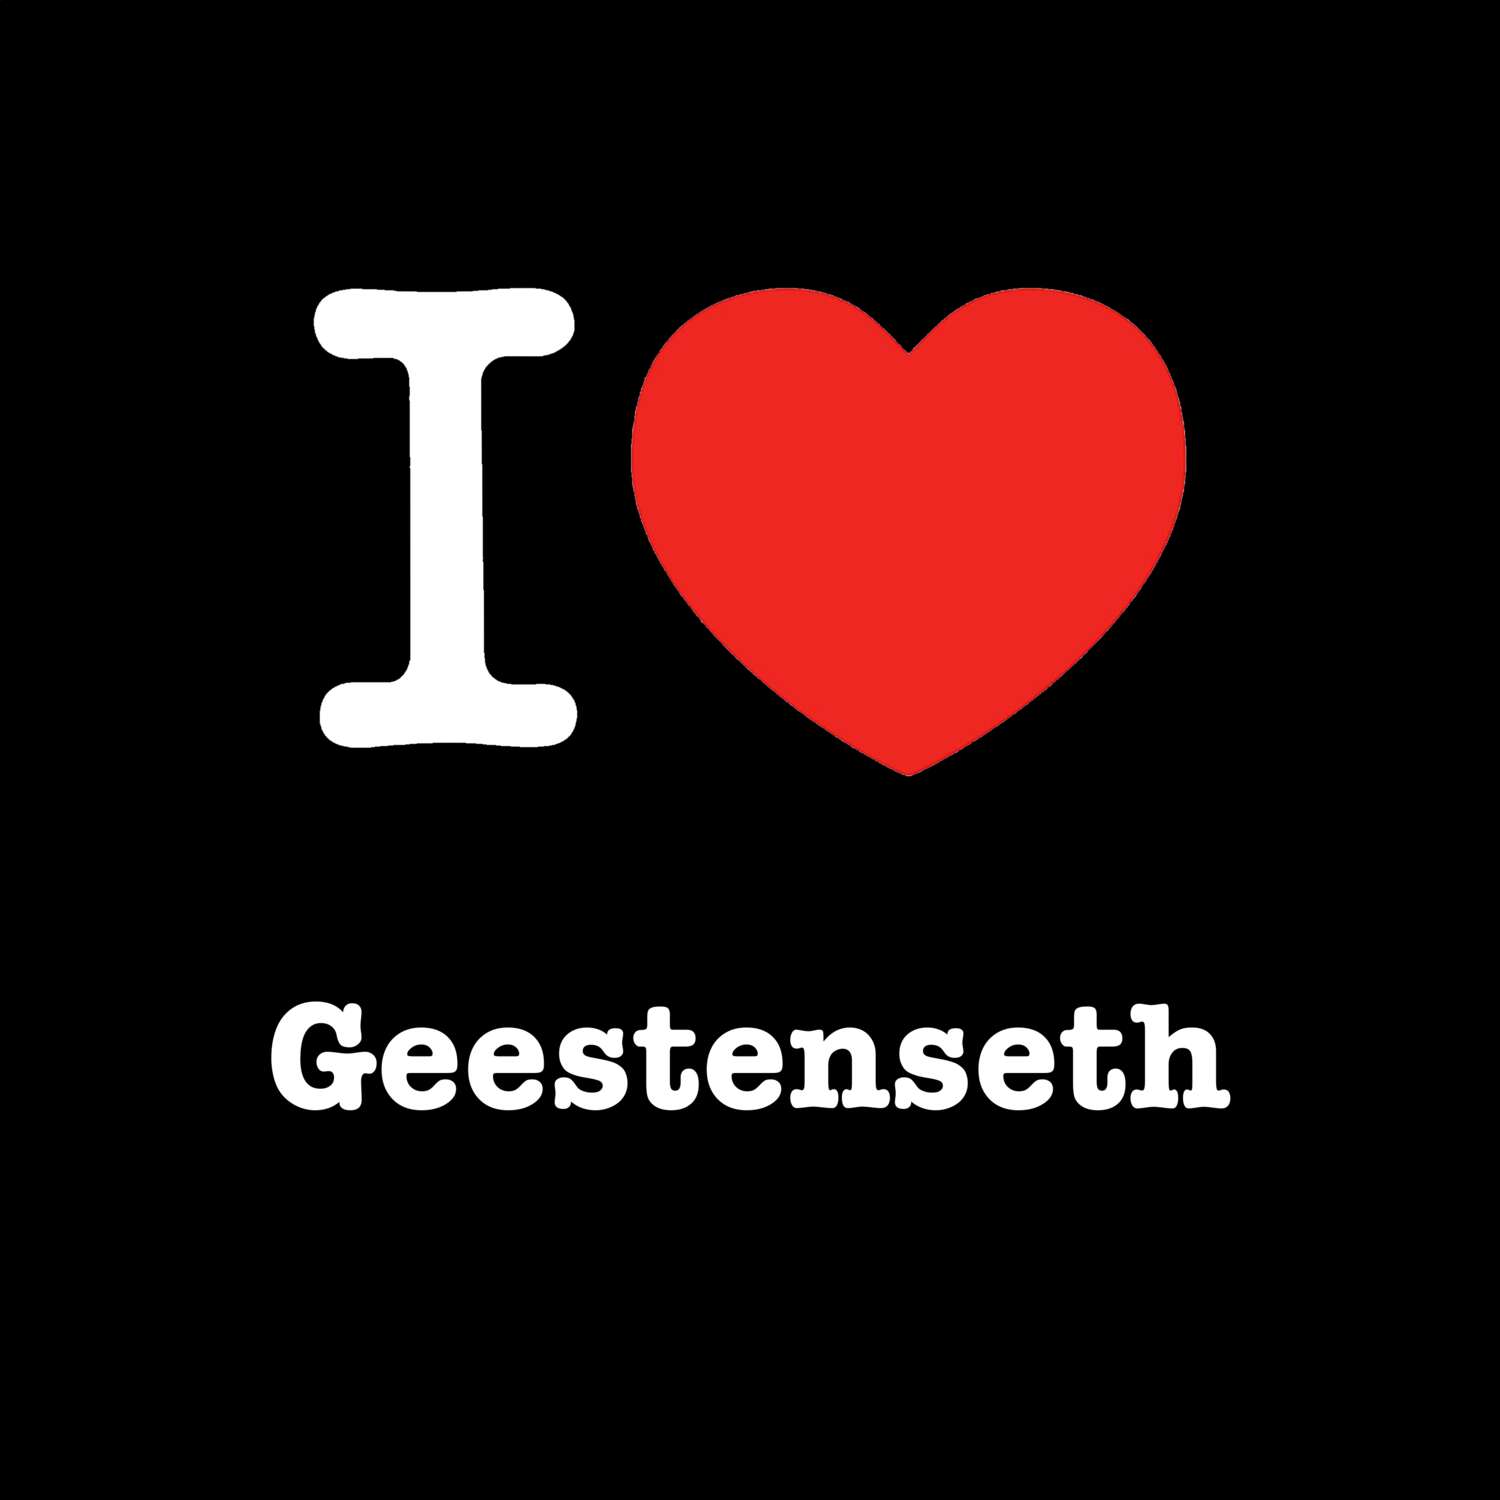 Geestenseth T-Shirt »I love«